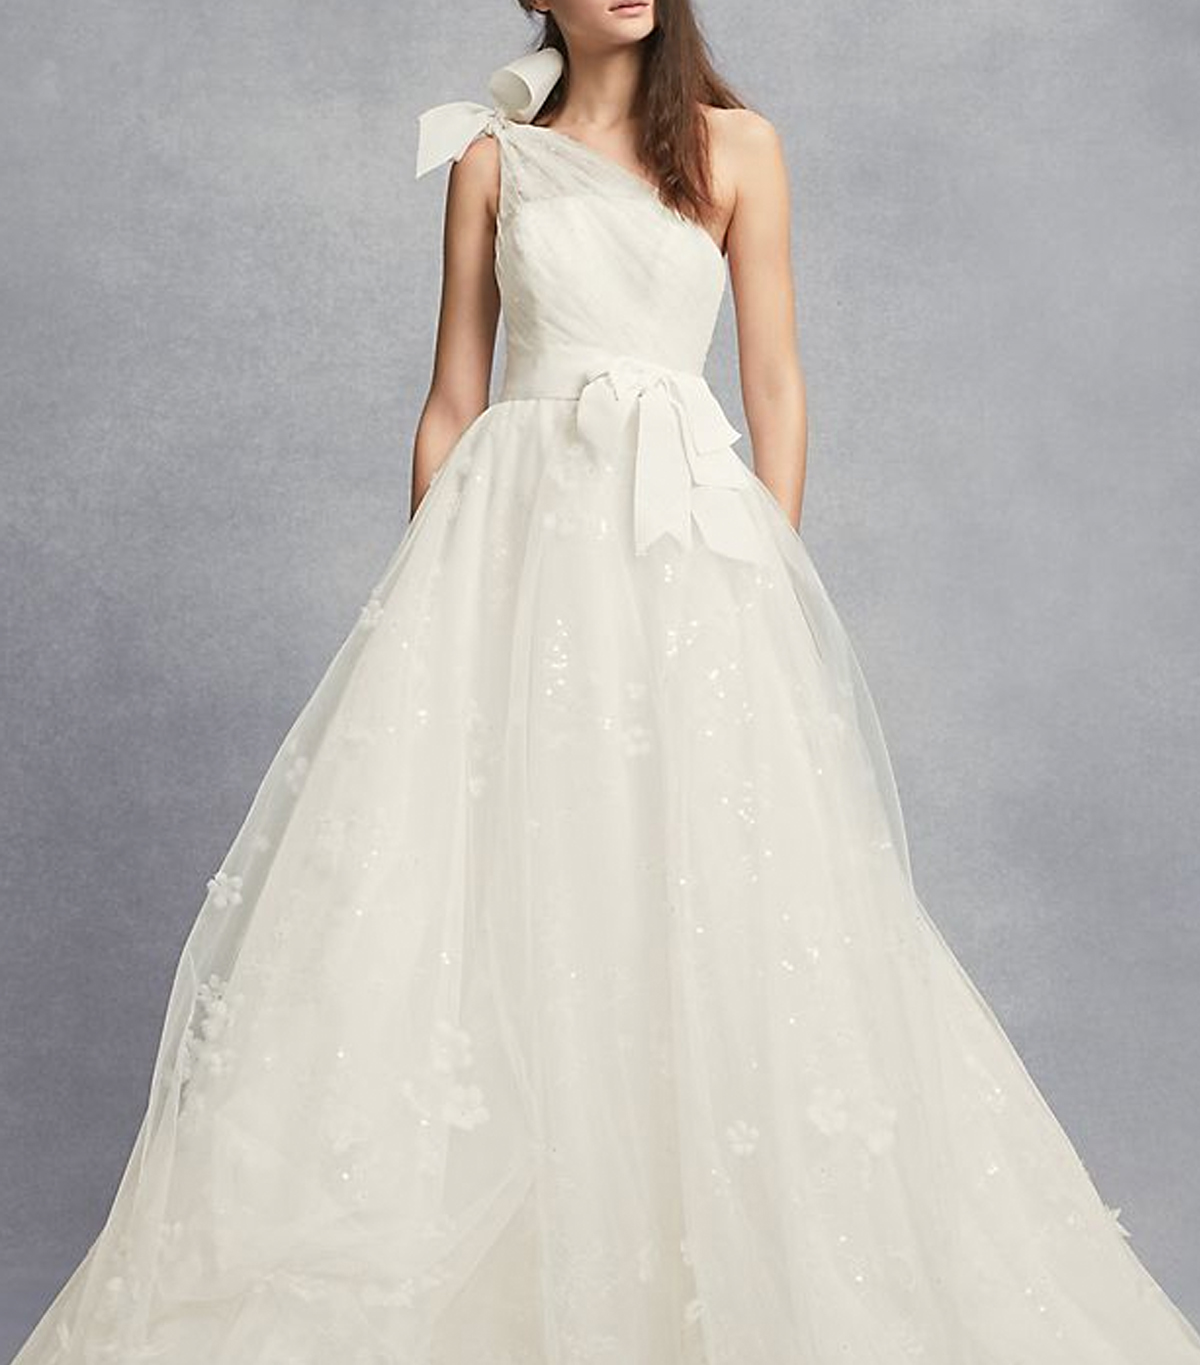 Buy > wang designer wedding dresses > in stock